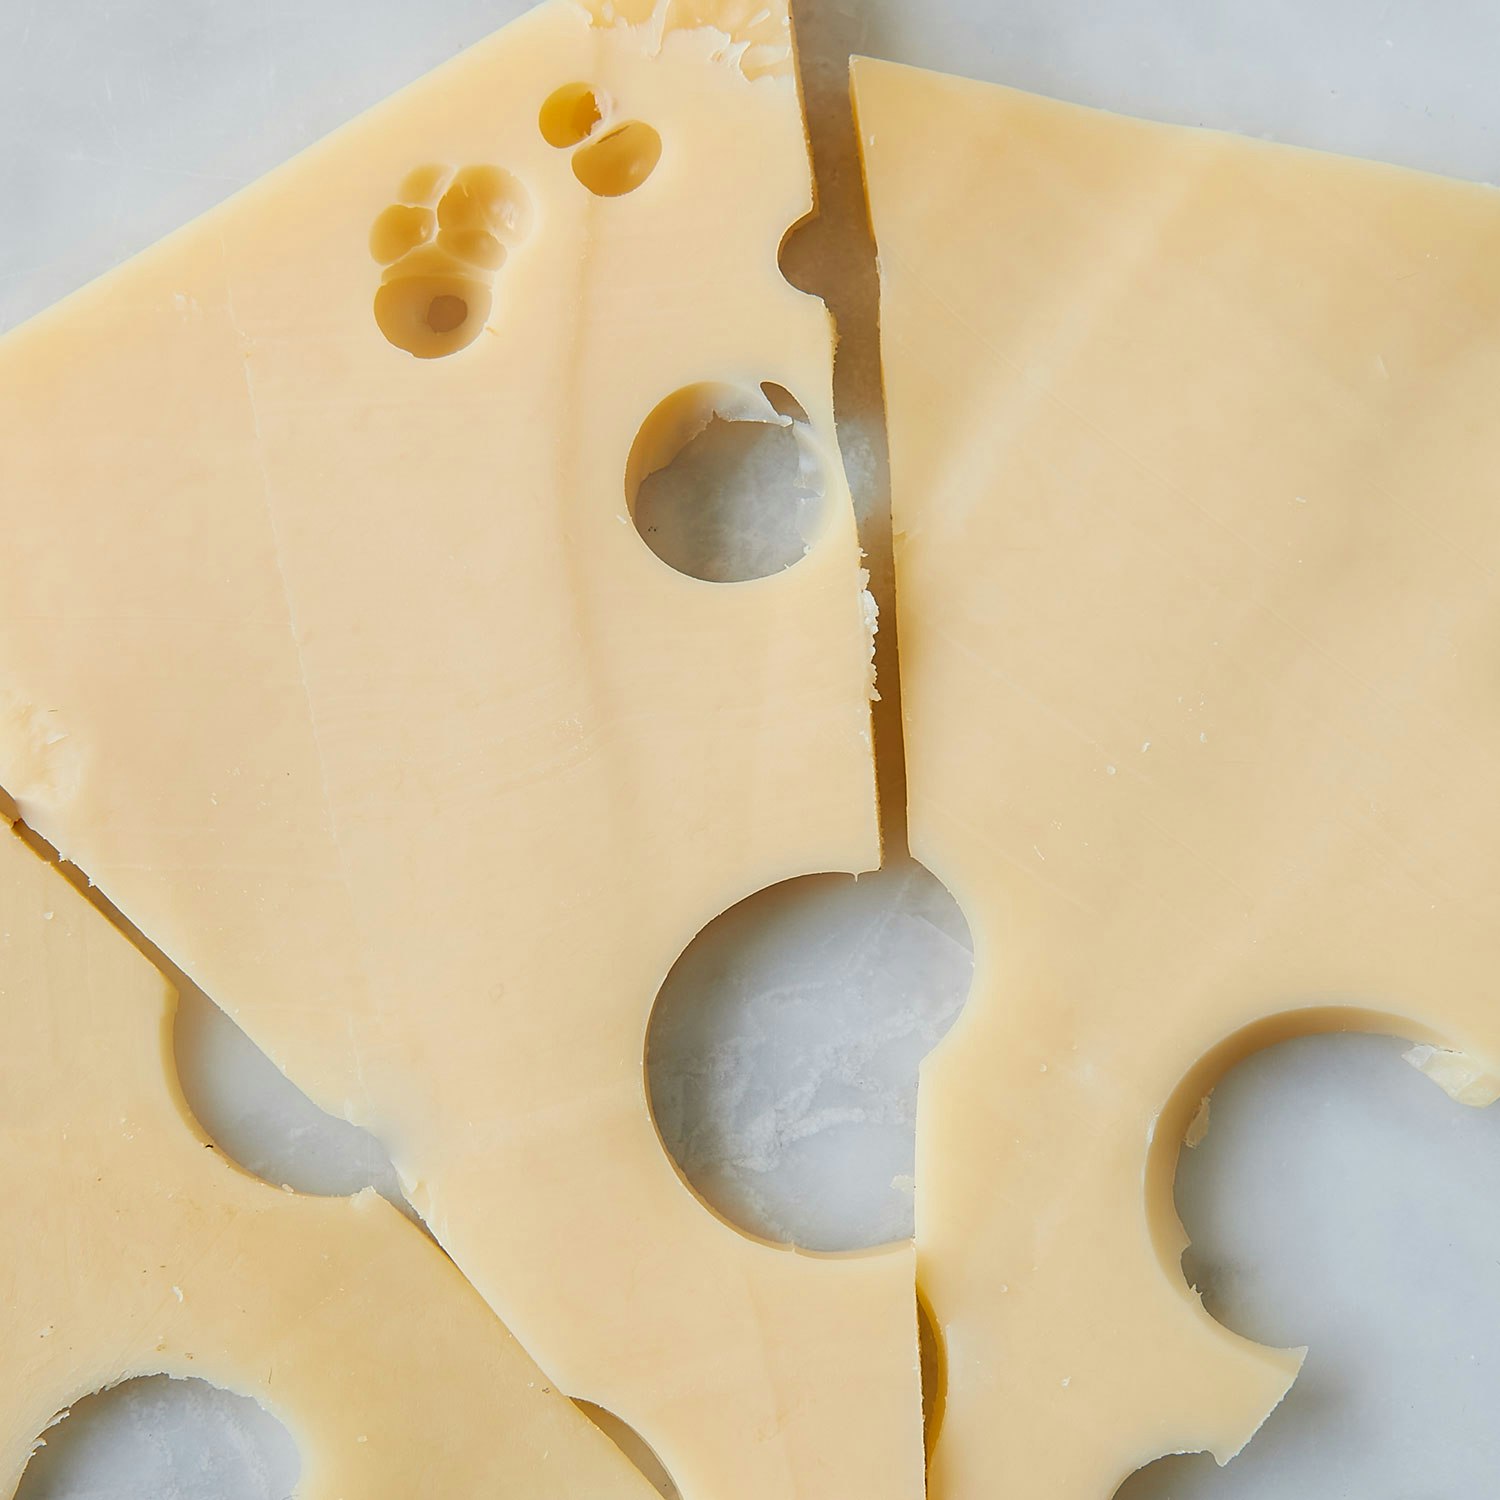 jarlsberg cheese